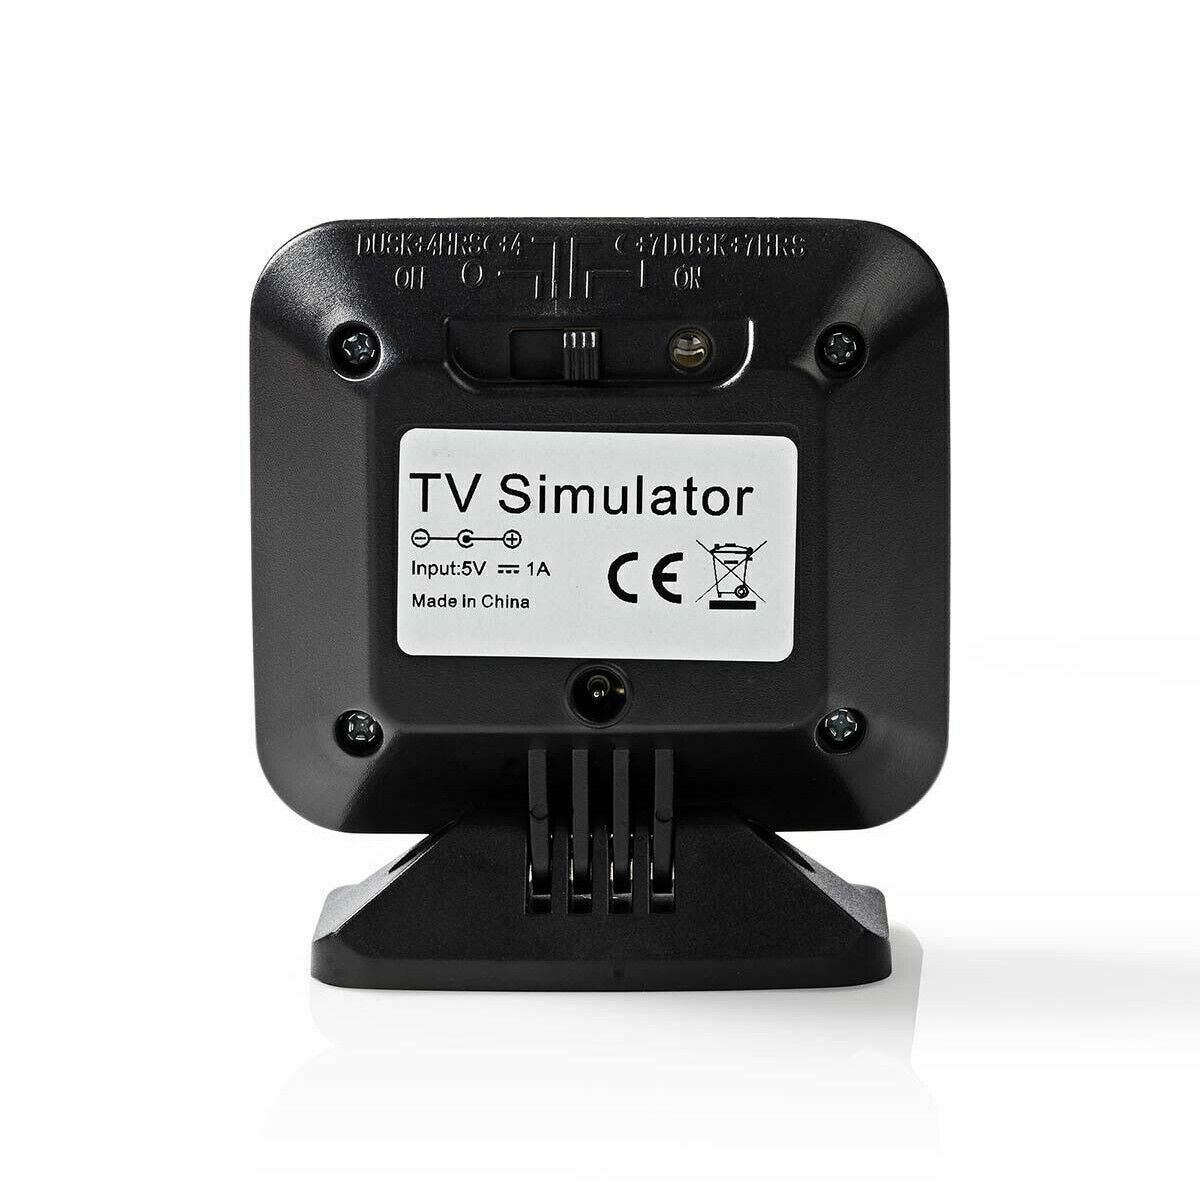 LED Dummy Fake TV Light Home Security Simulator Intruder Thief Deterrent 5412810293629 | eBay